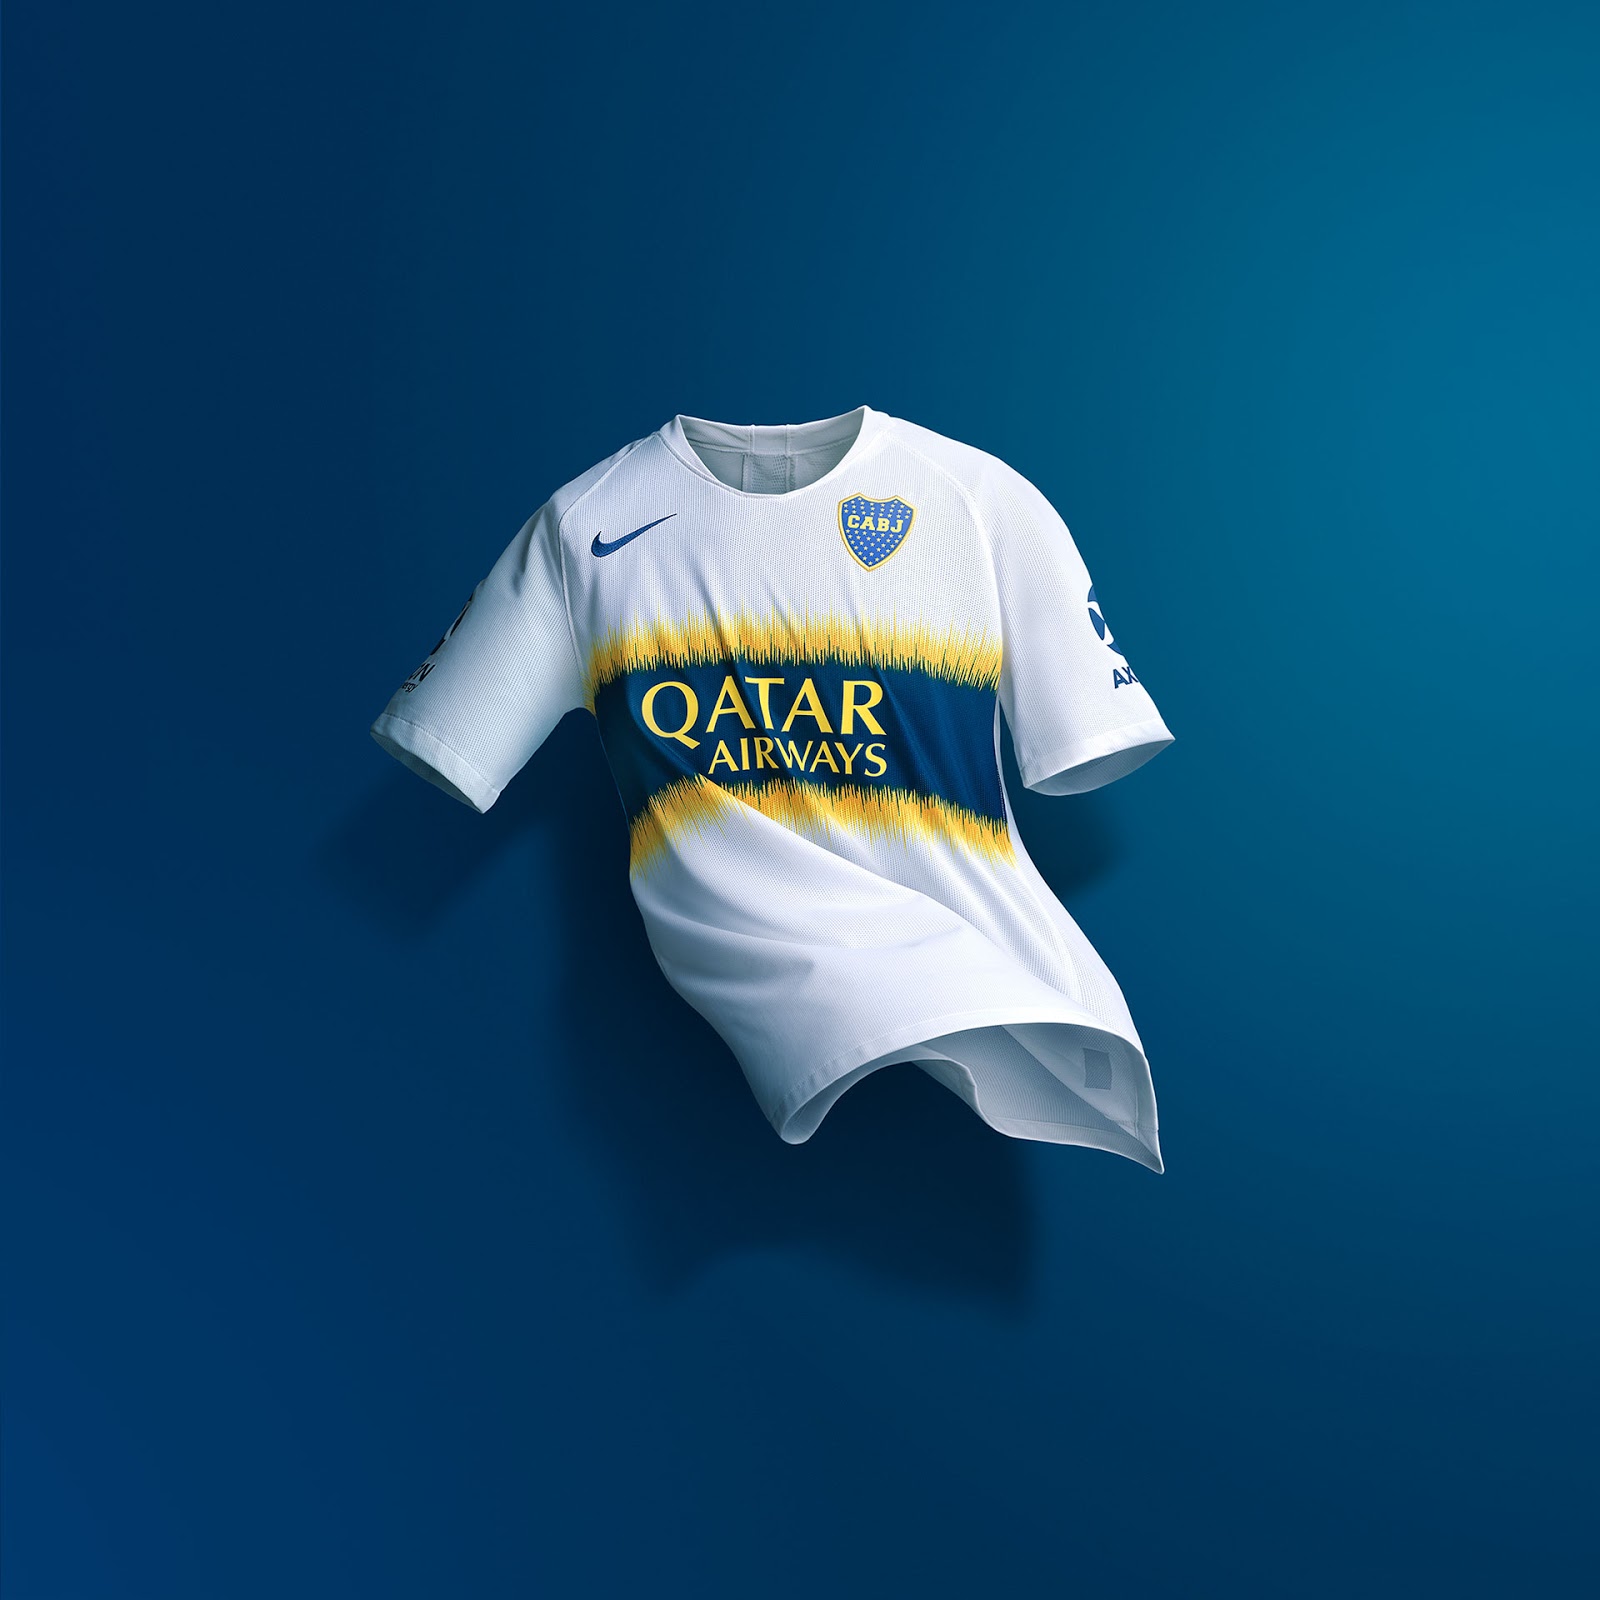 Boca Juniors 18-19 Home & Away Kits Released - Headlines